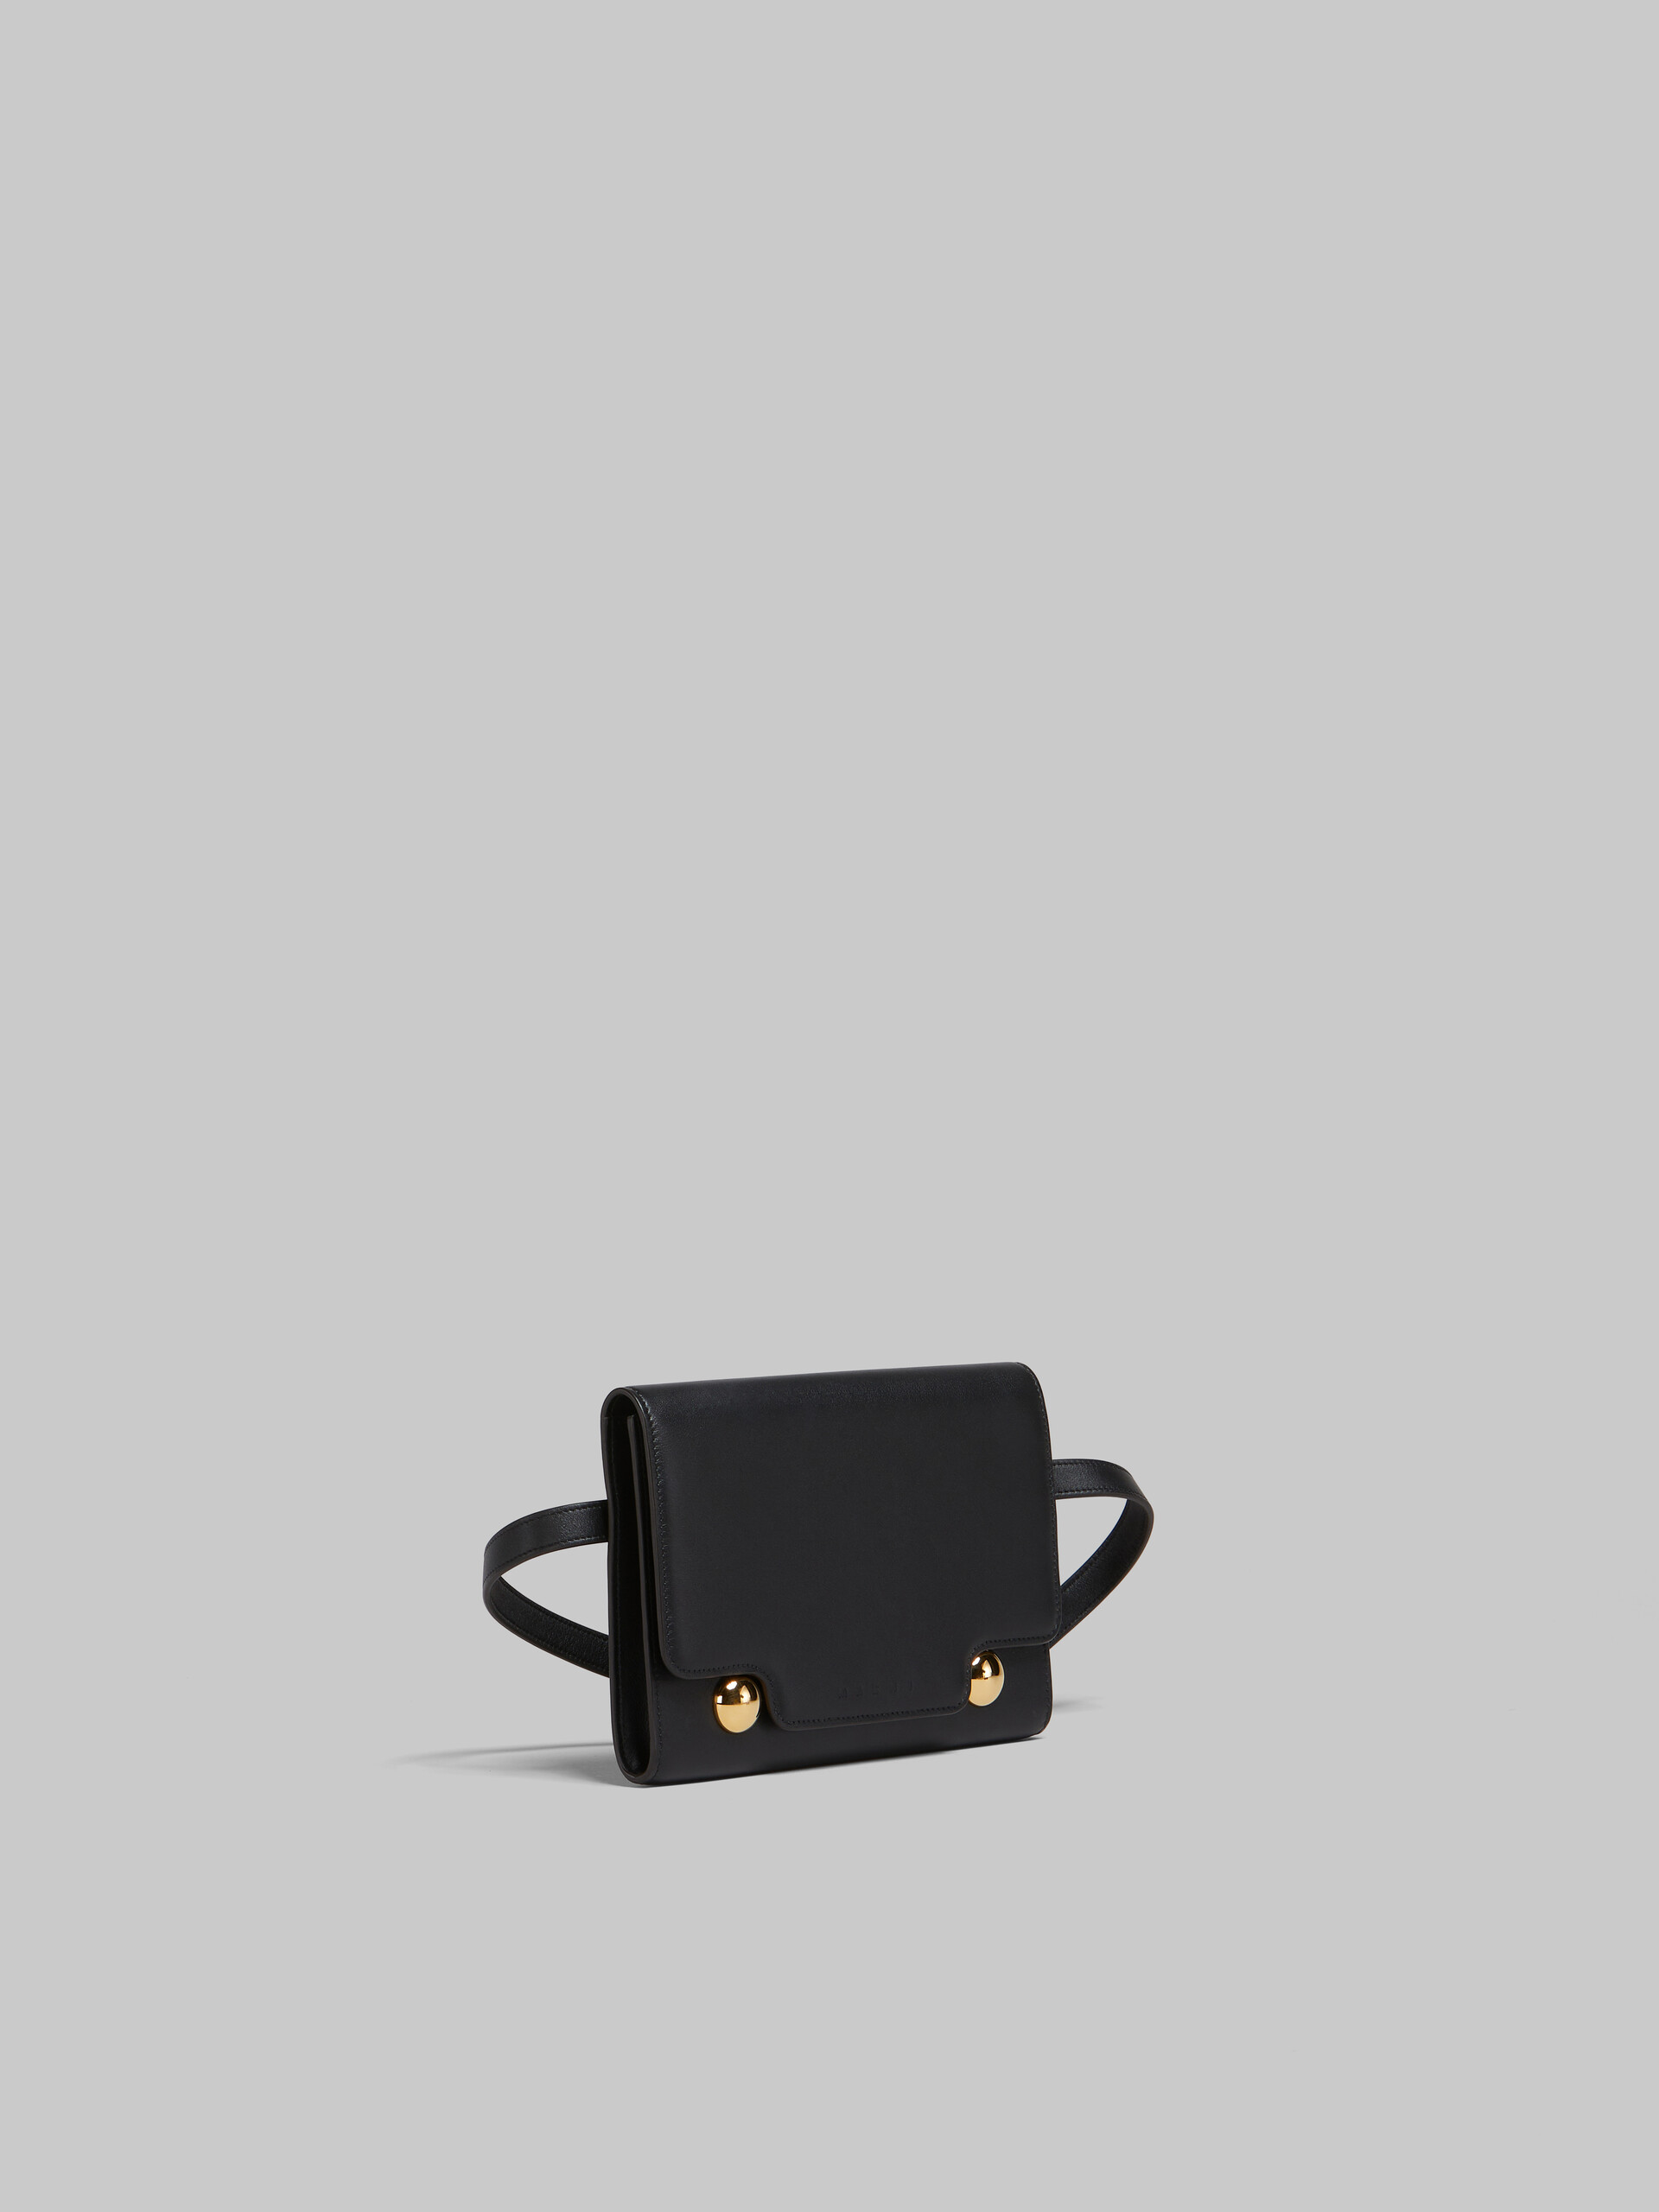 Black leather Trunkaroo bum bag - Belt Bags - Image 6